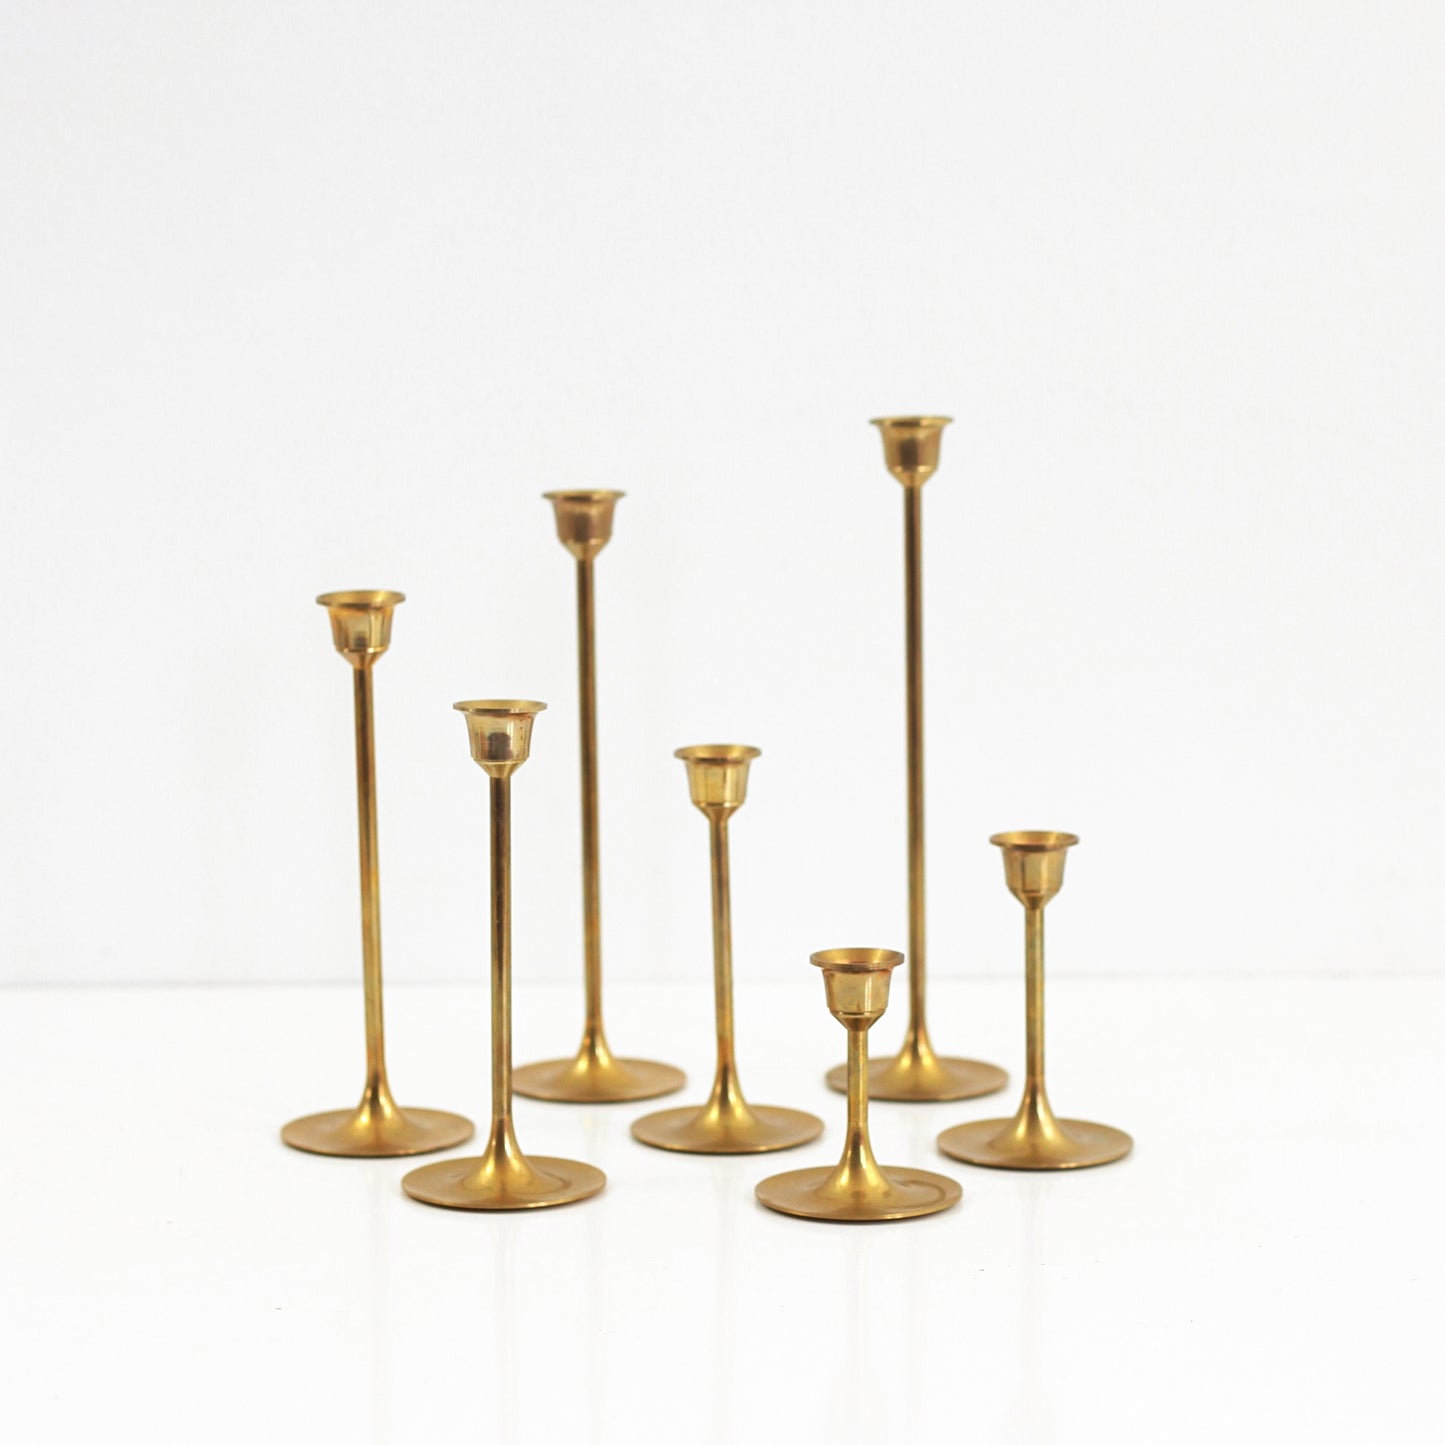 SOLD - Set of Seven Mid Century Modern Brass Candlesticks